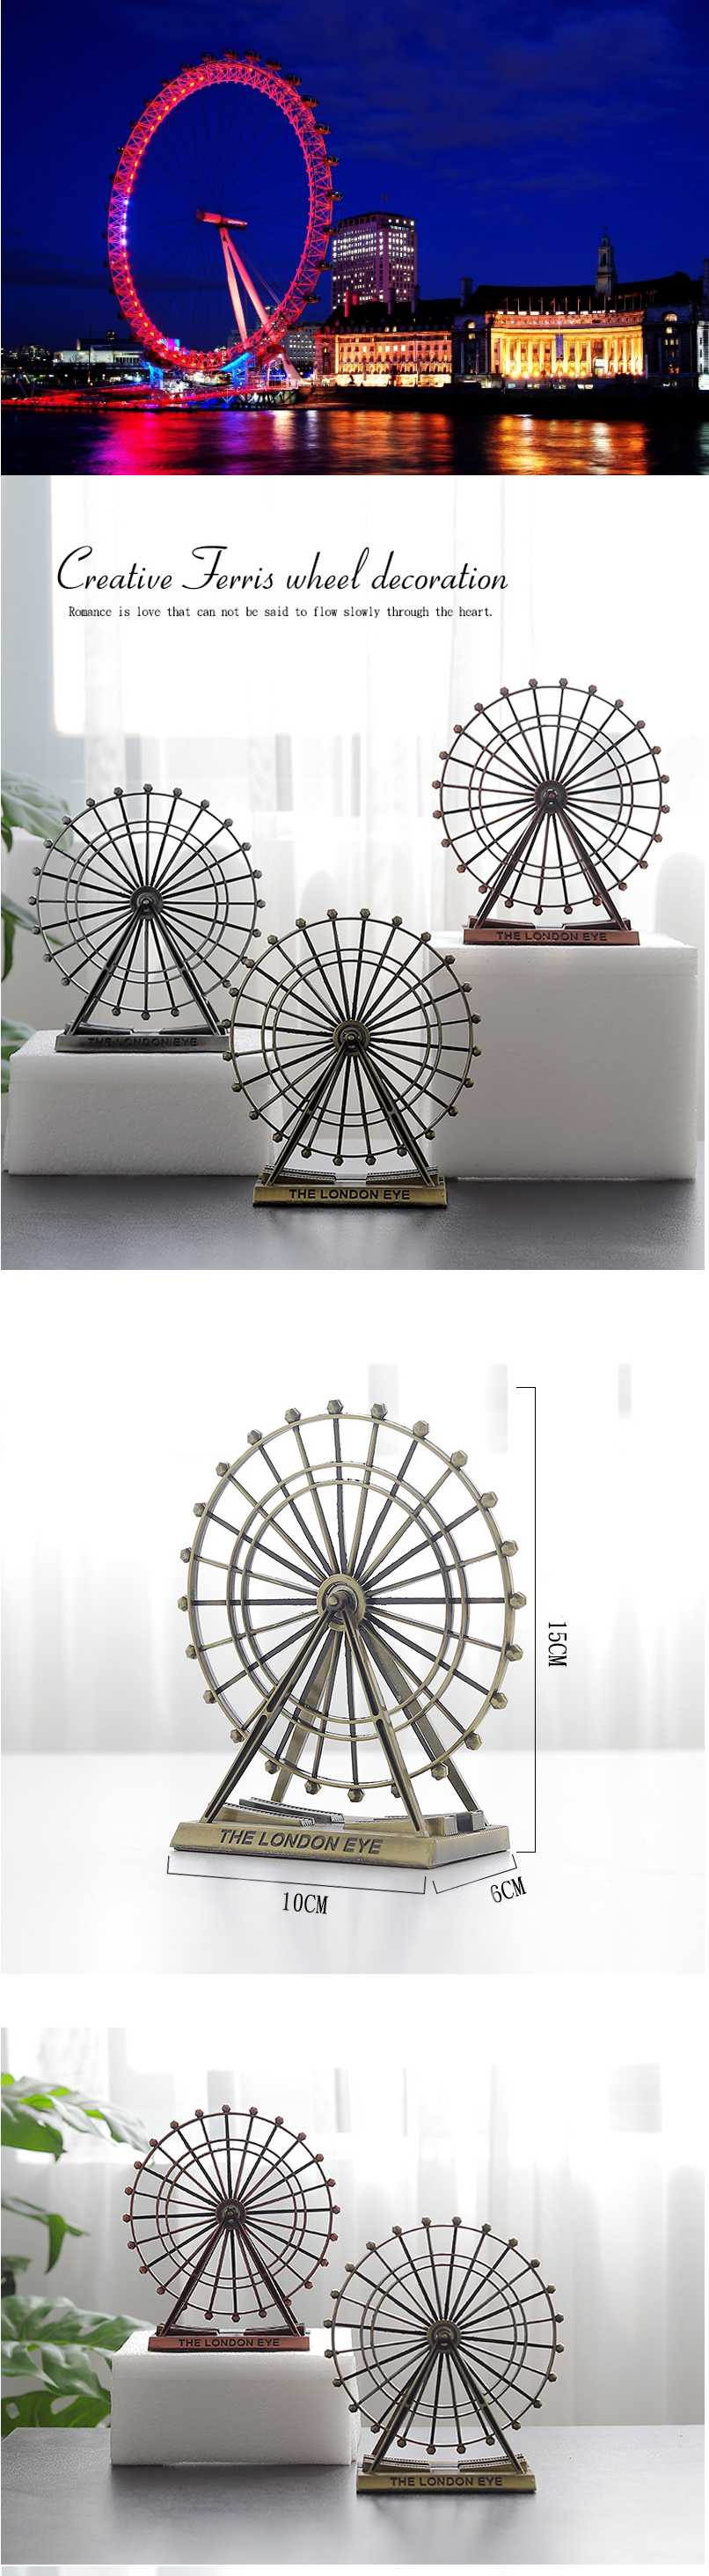 Retro-Metal-The-London-Eye-Ferris-Wheel-Ornament-England-Building-Home-Office-Creative-Desktop-Decor-1547998-1